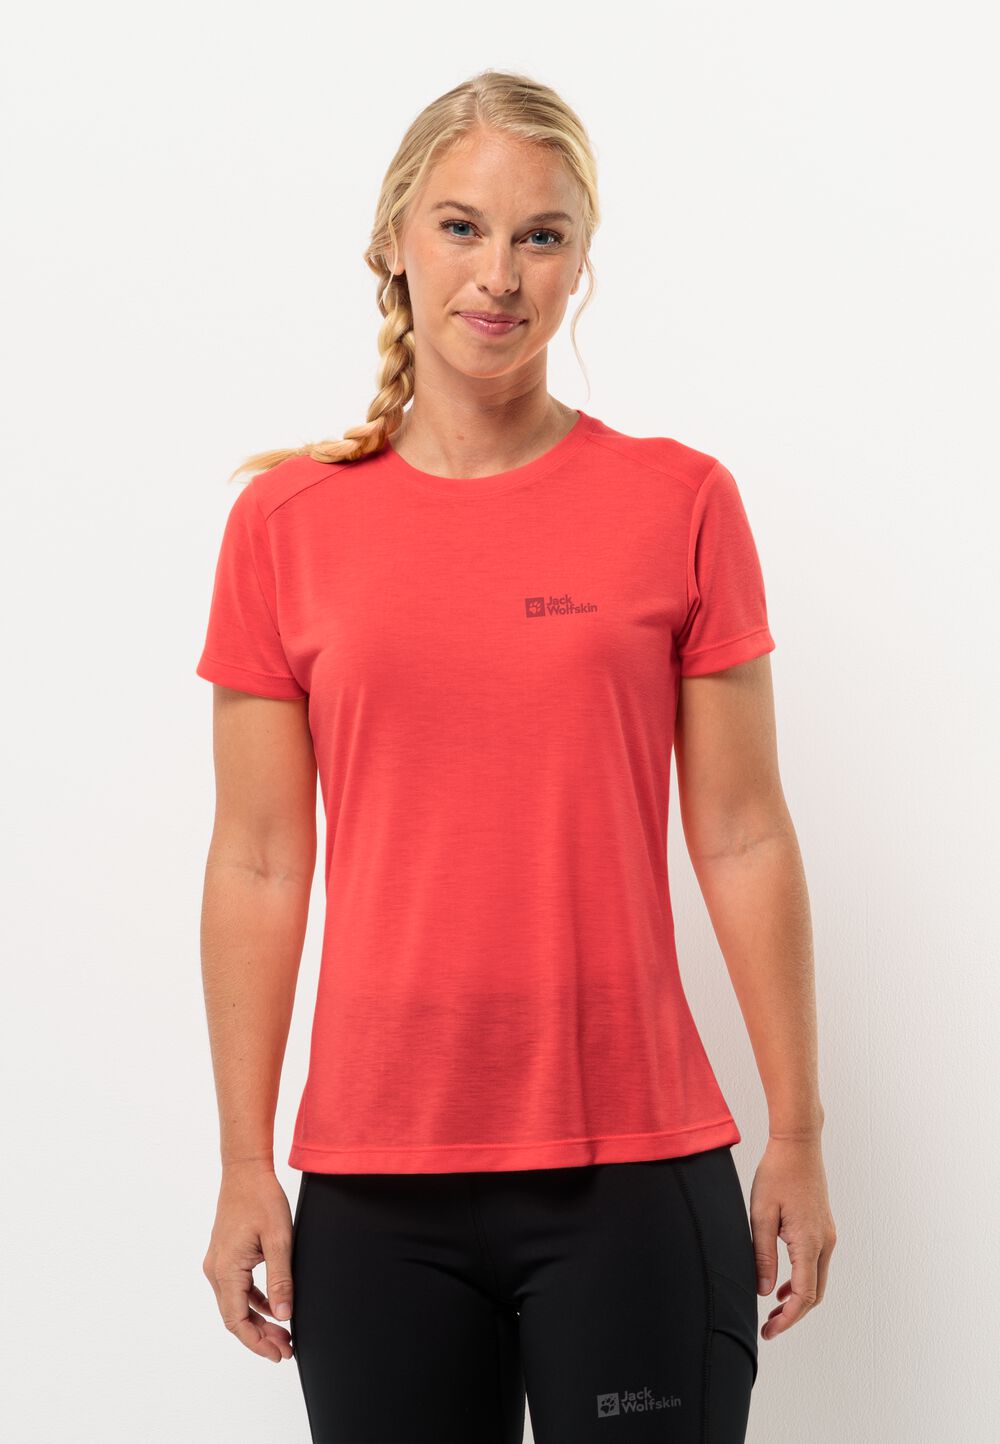 Jack Wolfskin Vonnan S S T-Shirt Women Functioneel shirt Dames S rood vibrant red